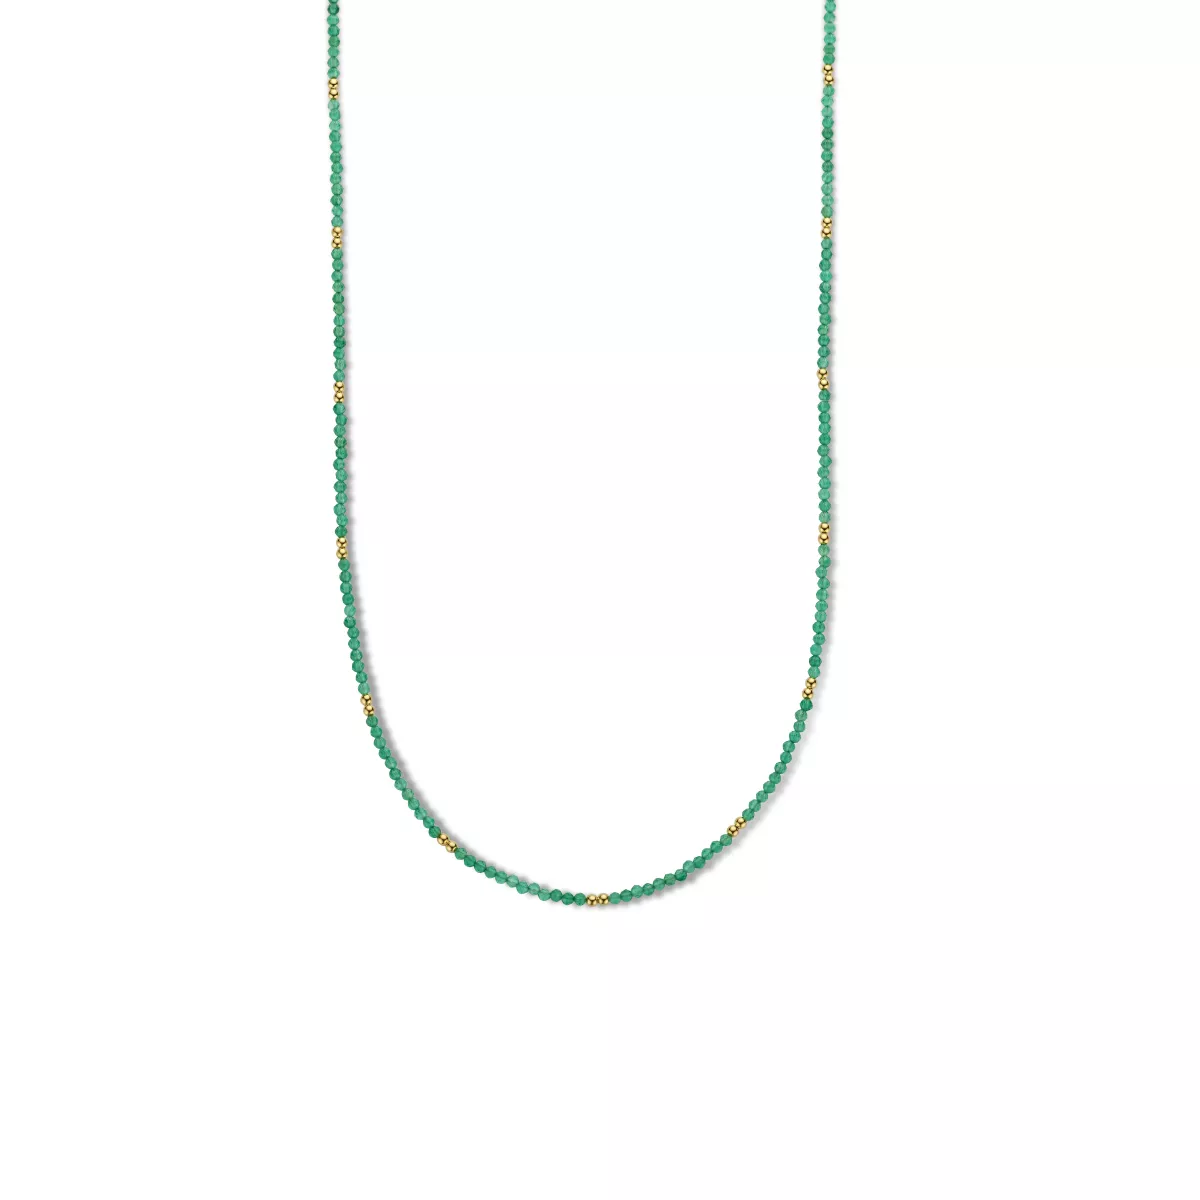 Ketting Bolletjes zilver-agaat goudkleurig-groen 2,2 mm 40-44 cm